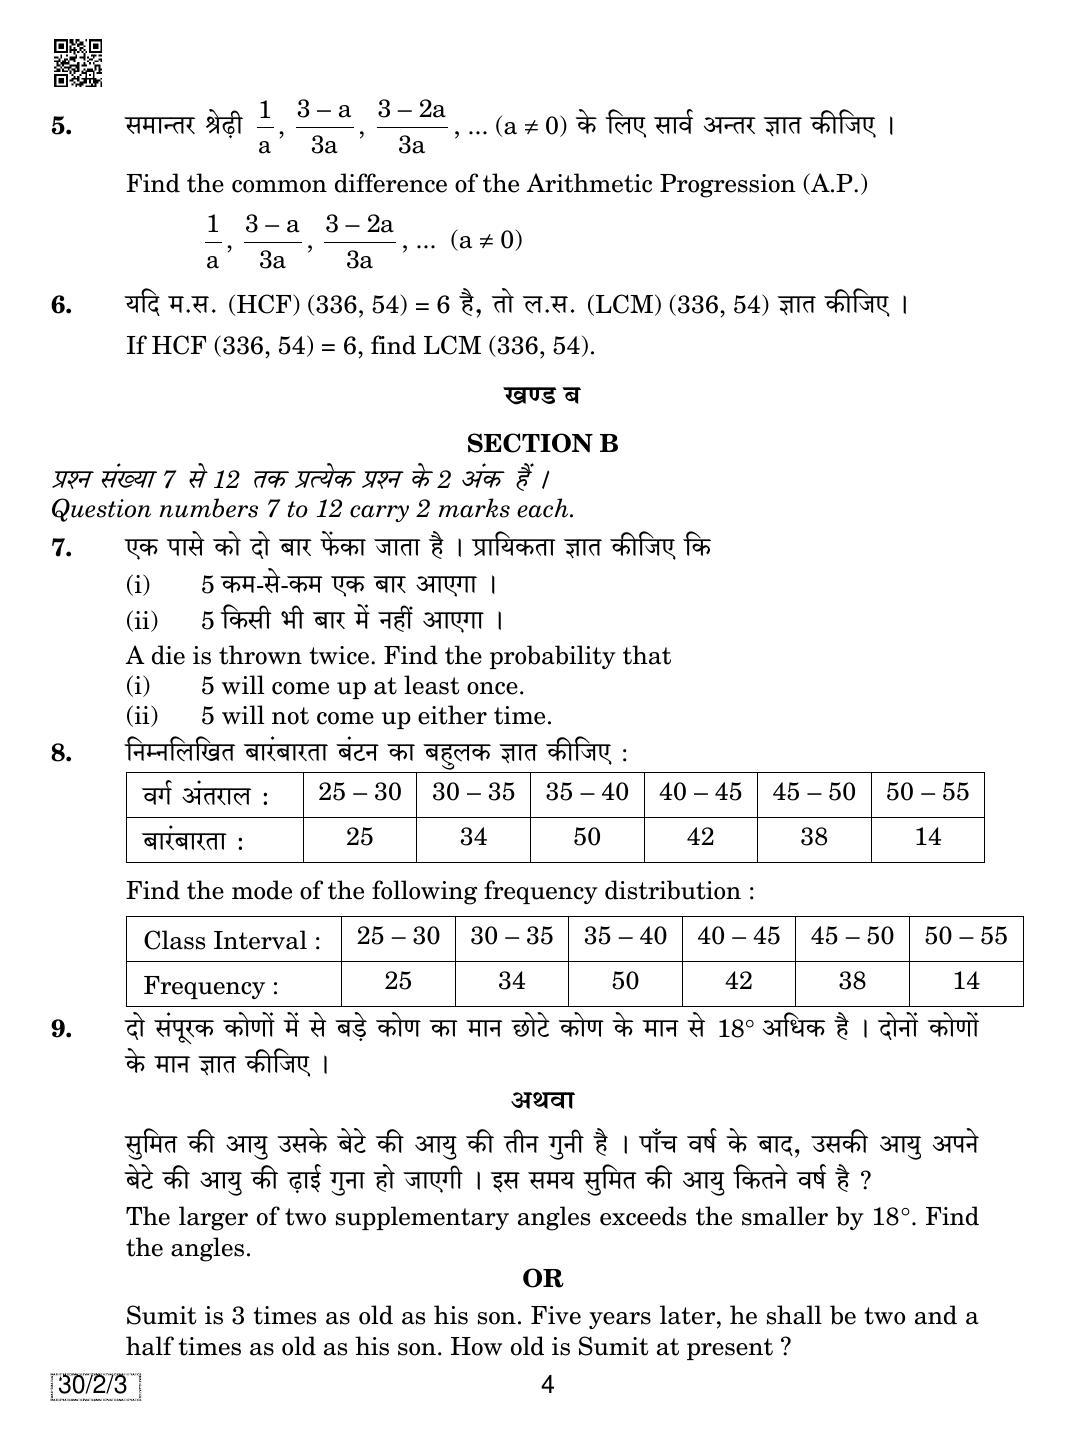 CBSE Class 10 Maths (30/2/3 - SET 3) 2019 Question Paper - Page 4